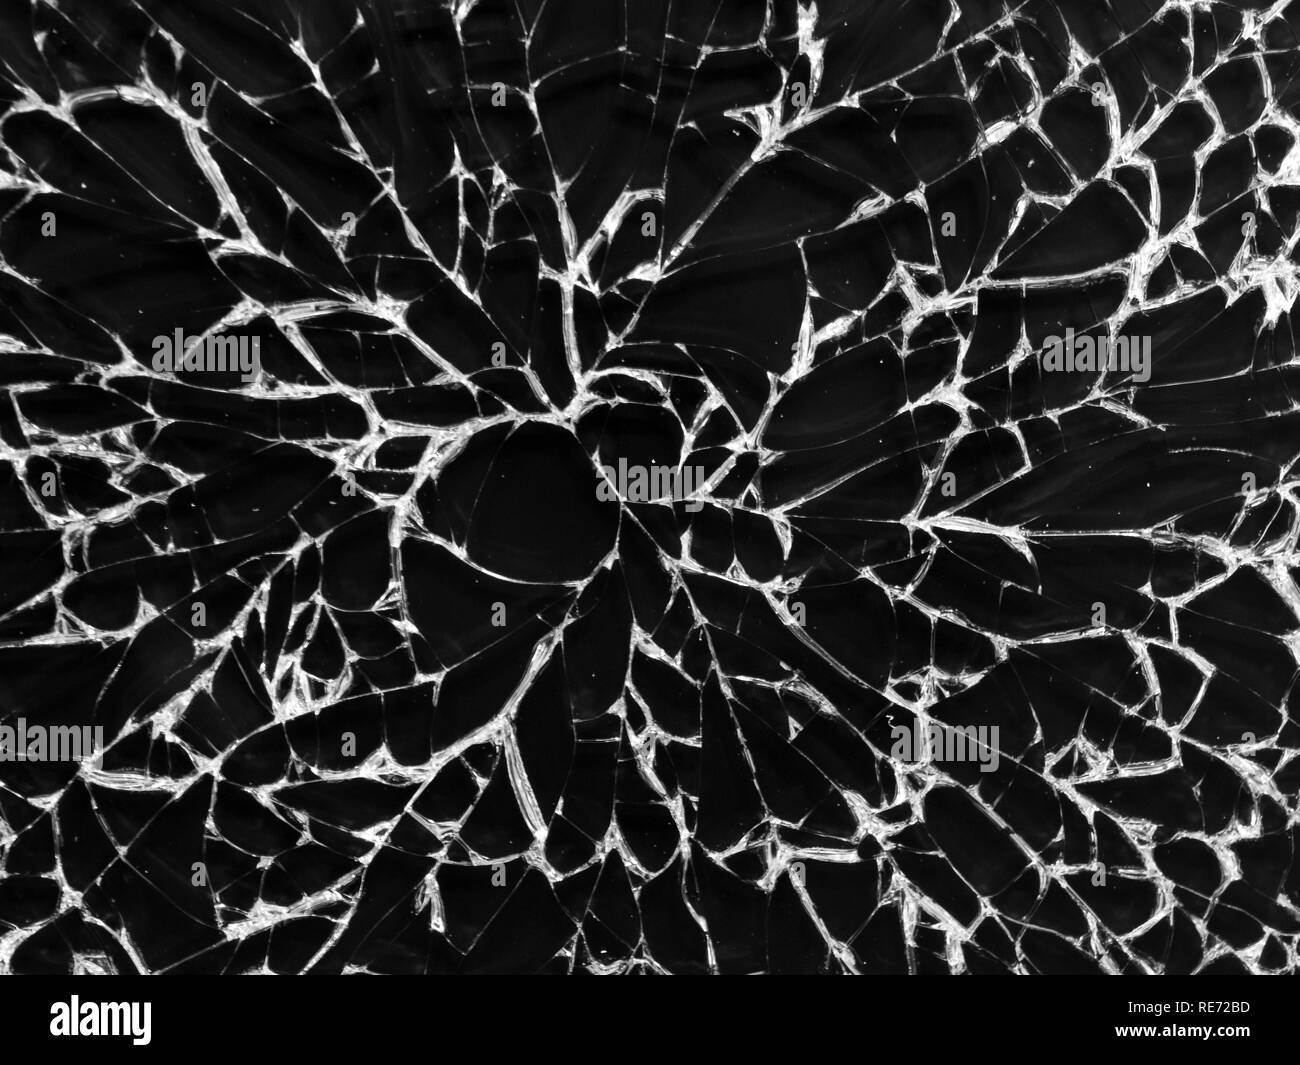 Eksklusiv delvist Knoglemarv Cracked glass texture on black background. Isolated realistic cracked glass  effect Stock Photo - Alamy